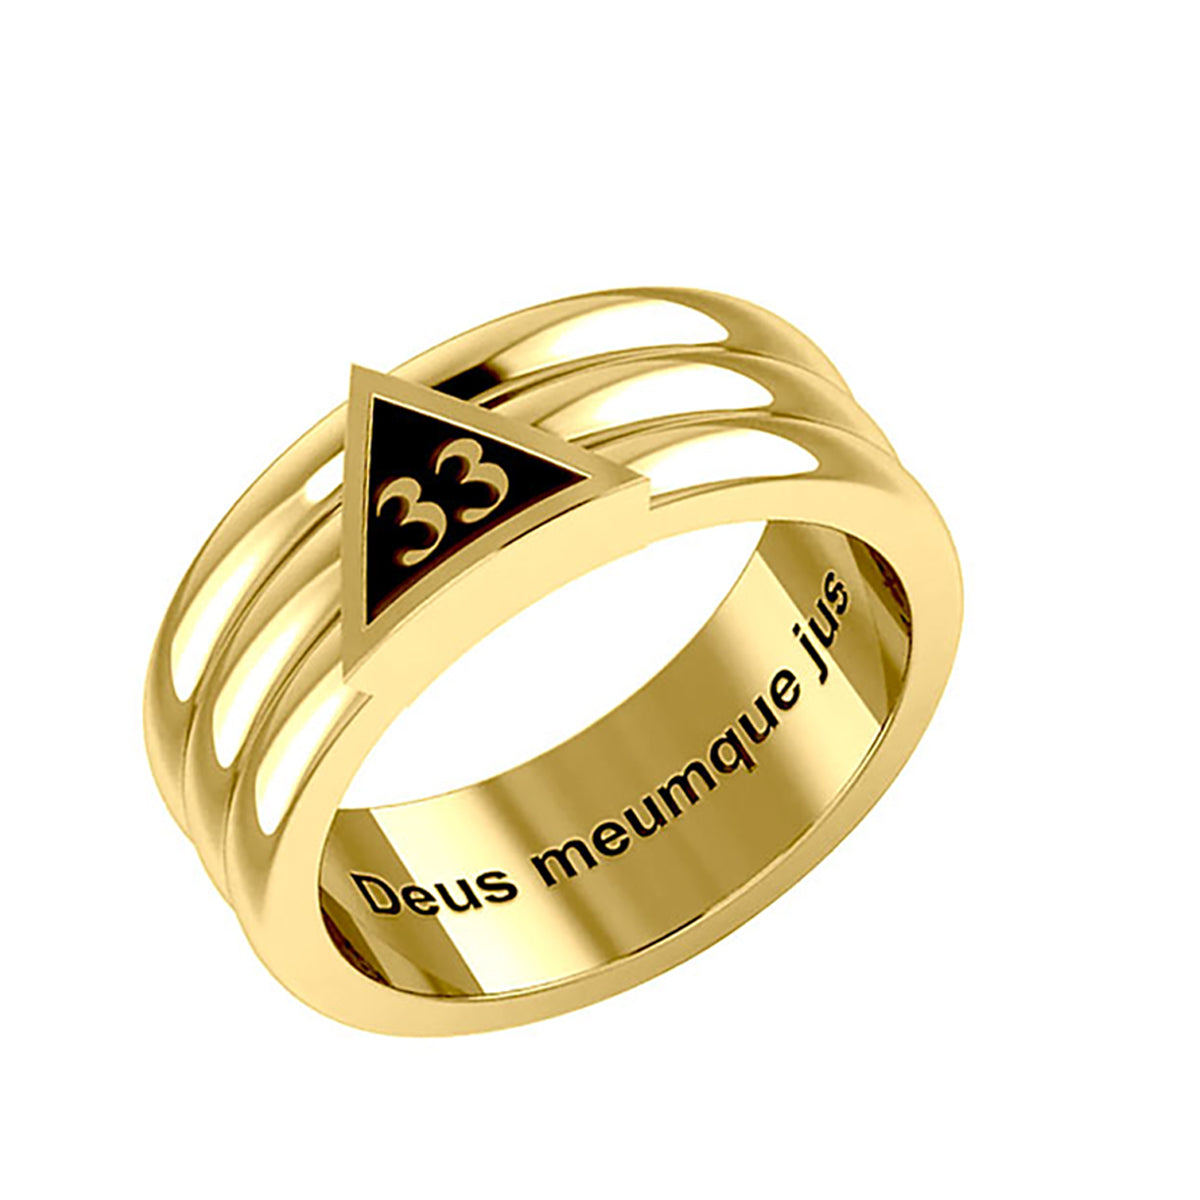 Gold Plated Sterling Silver 925 Masonic Scottish Rite 33rd Degree & Supreme Council Masonic Mason Ring